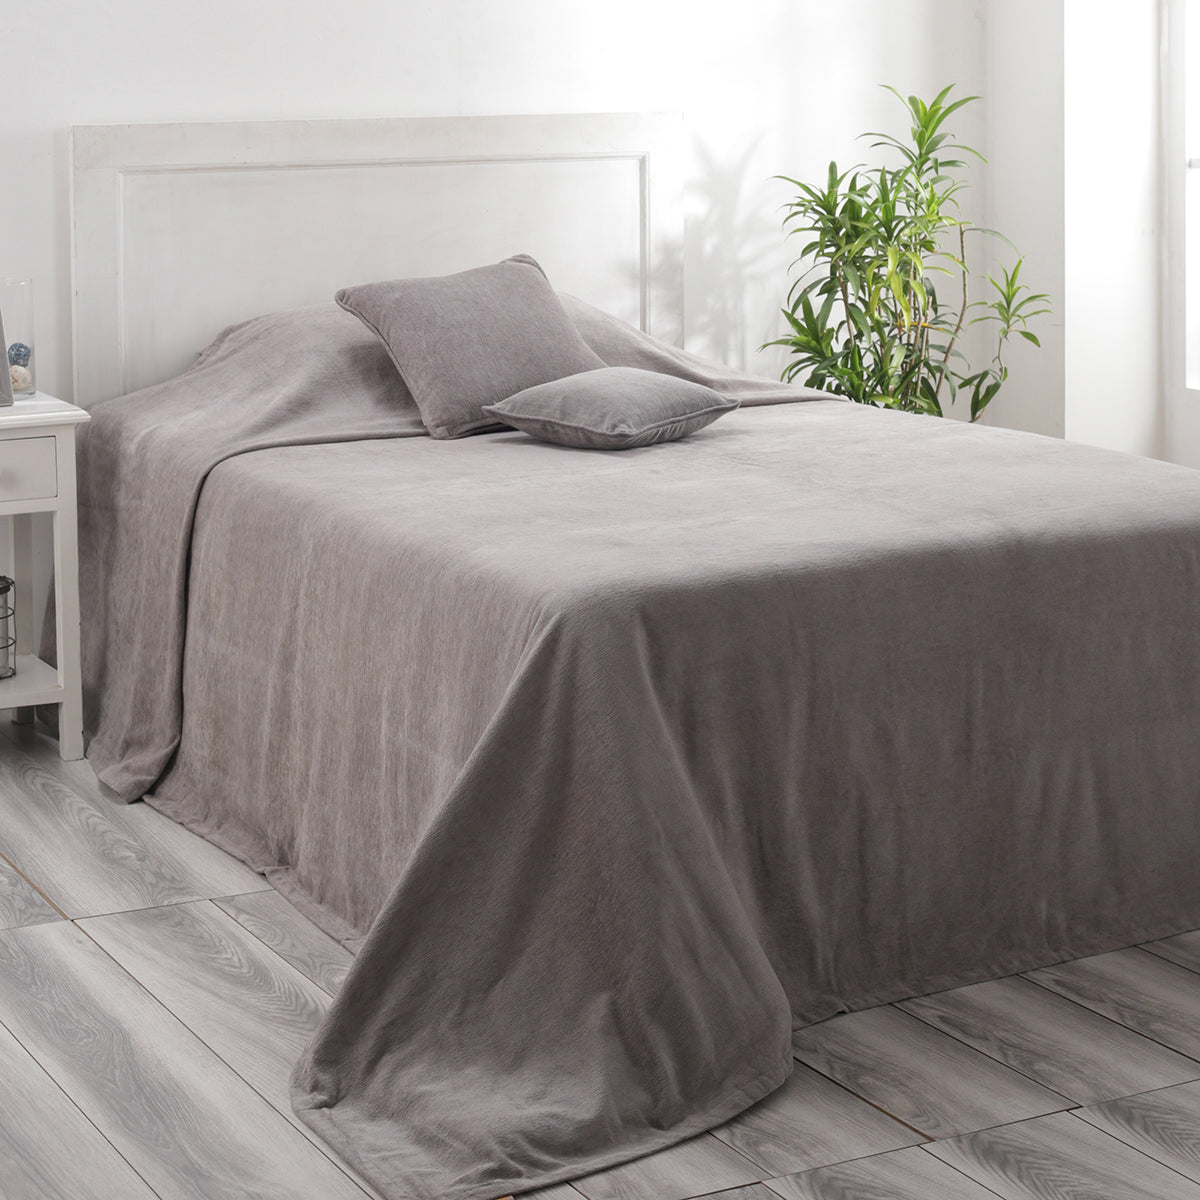 Jessica 100% Cotton Solid Woven Super Soft Wild Dove Bed Cover/Blanket